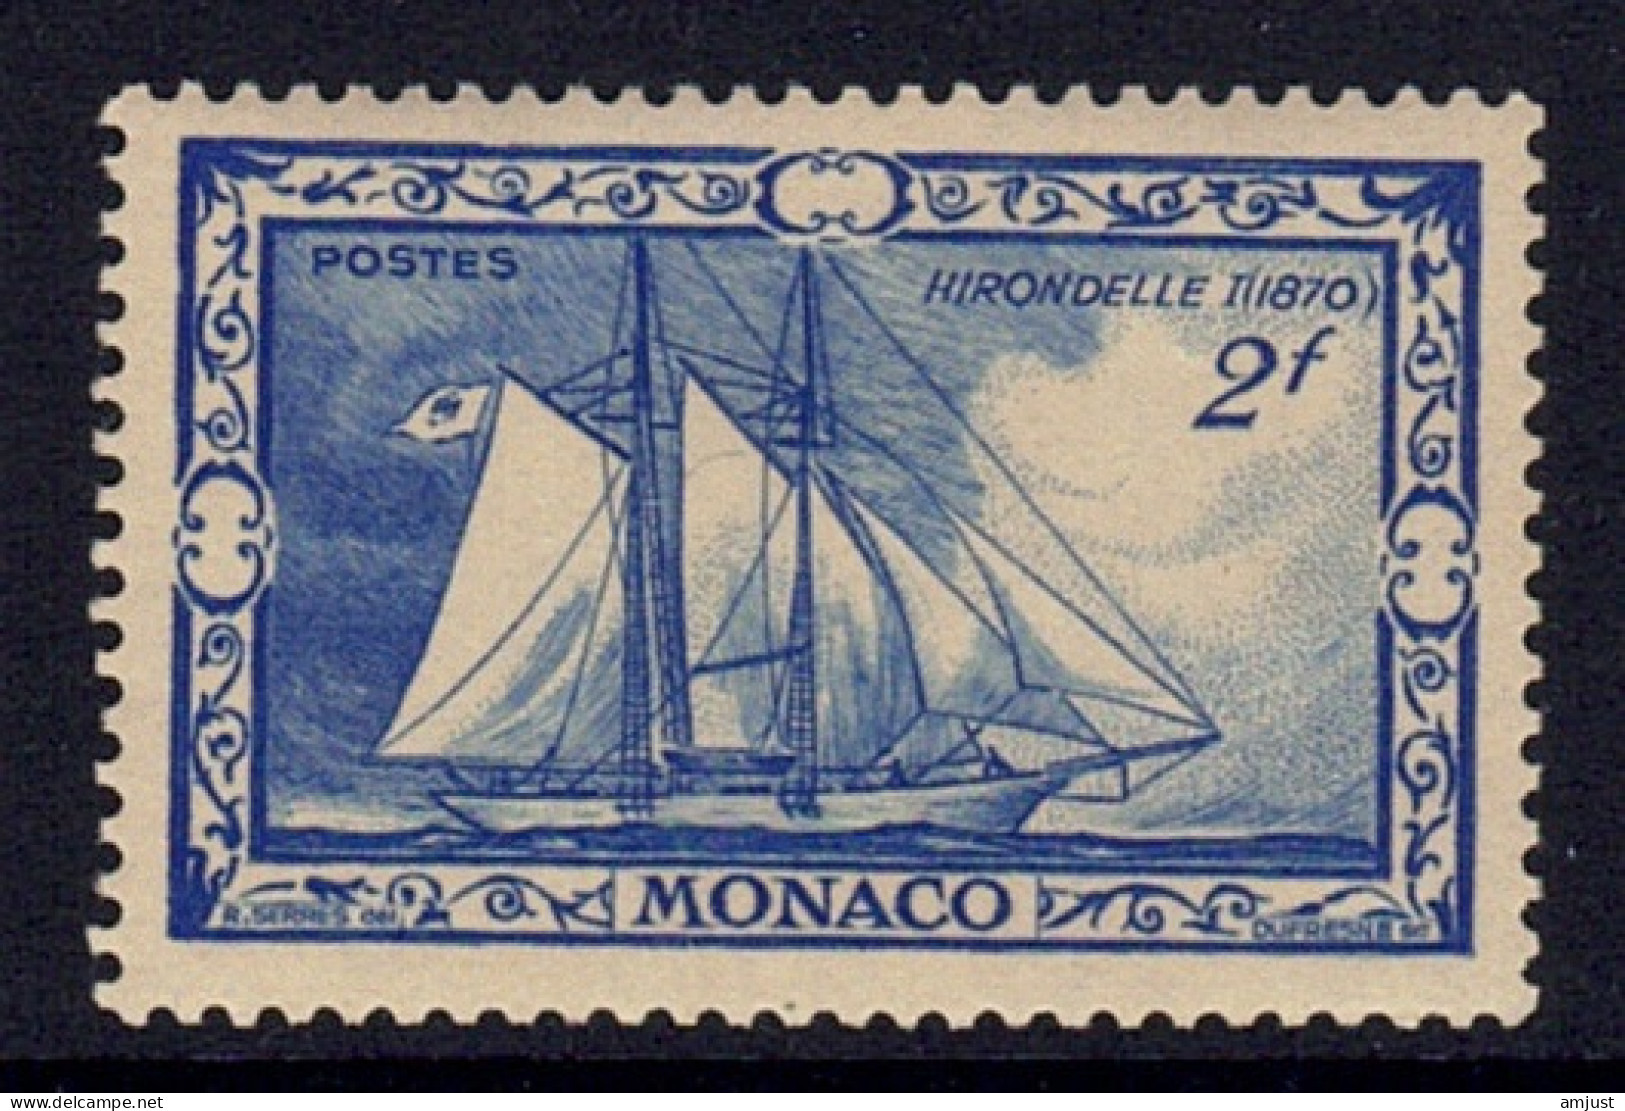 Monaco // 1949  // L'hirondelle Timbre Neuf** MNH  No. Y&T 324 - Neufs